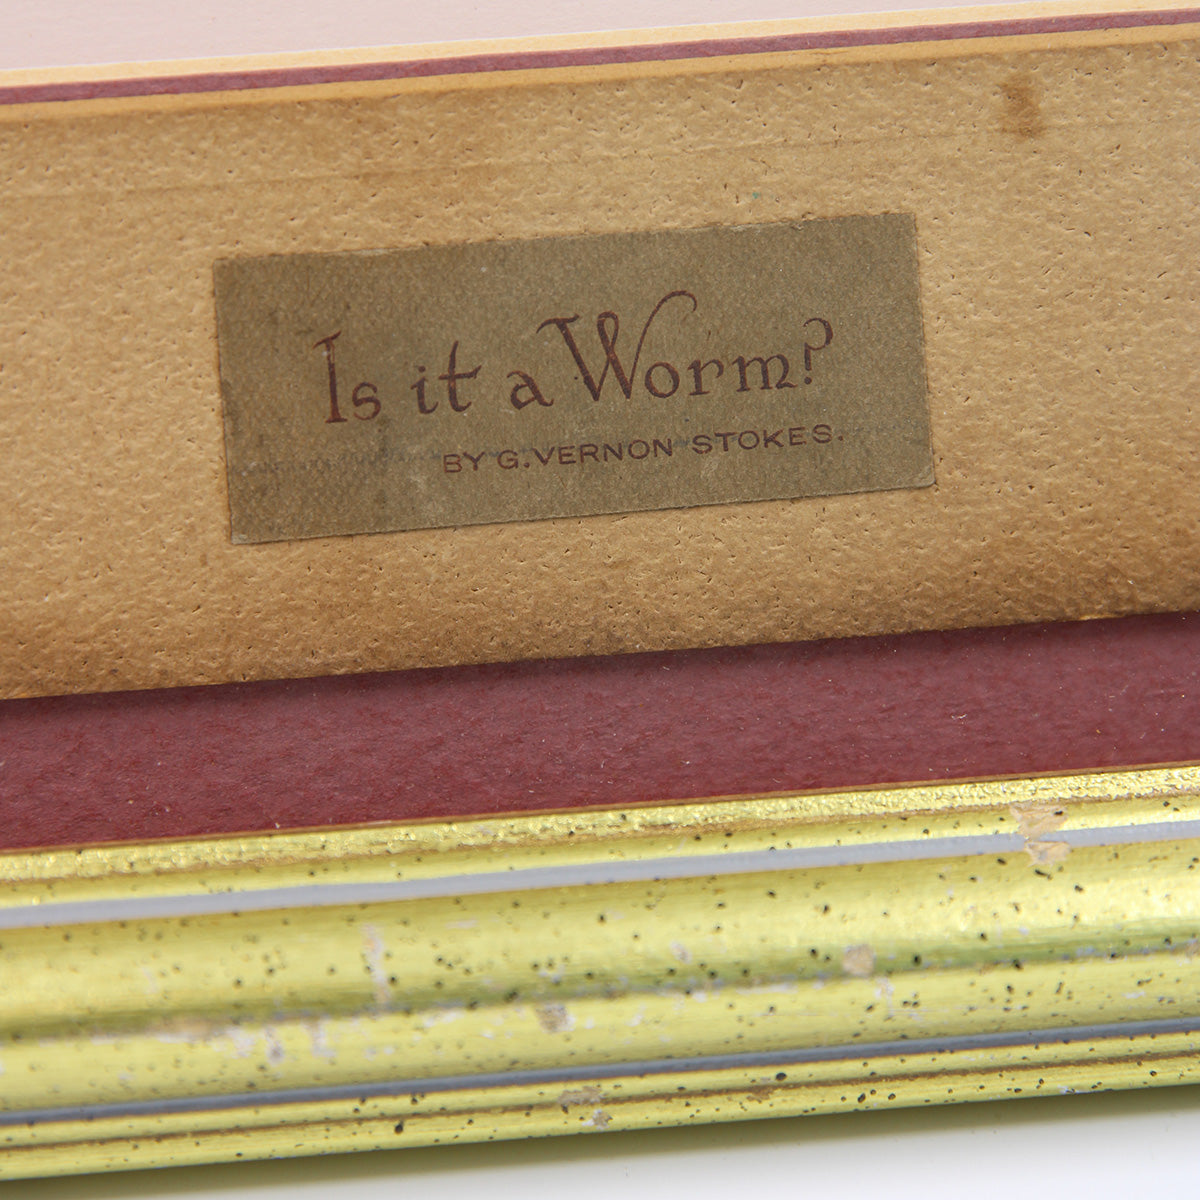 Is It a Worm? Bulldog Print, c.1930s - SOLD